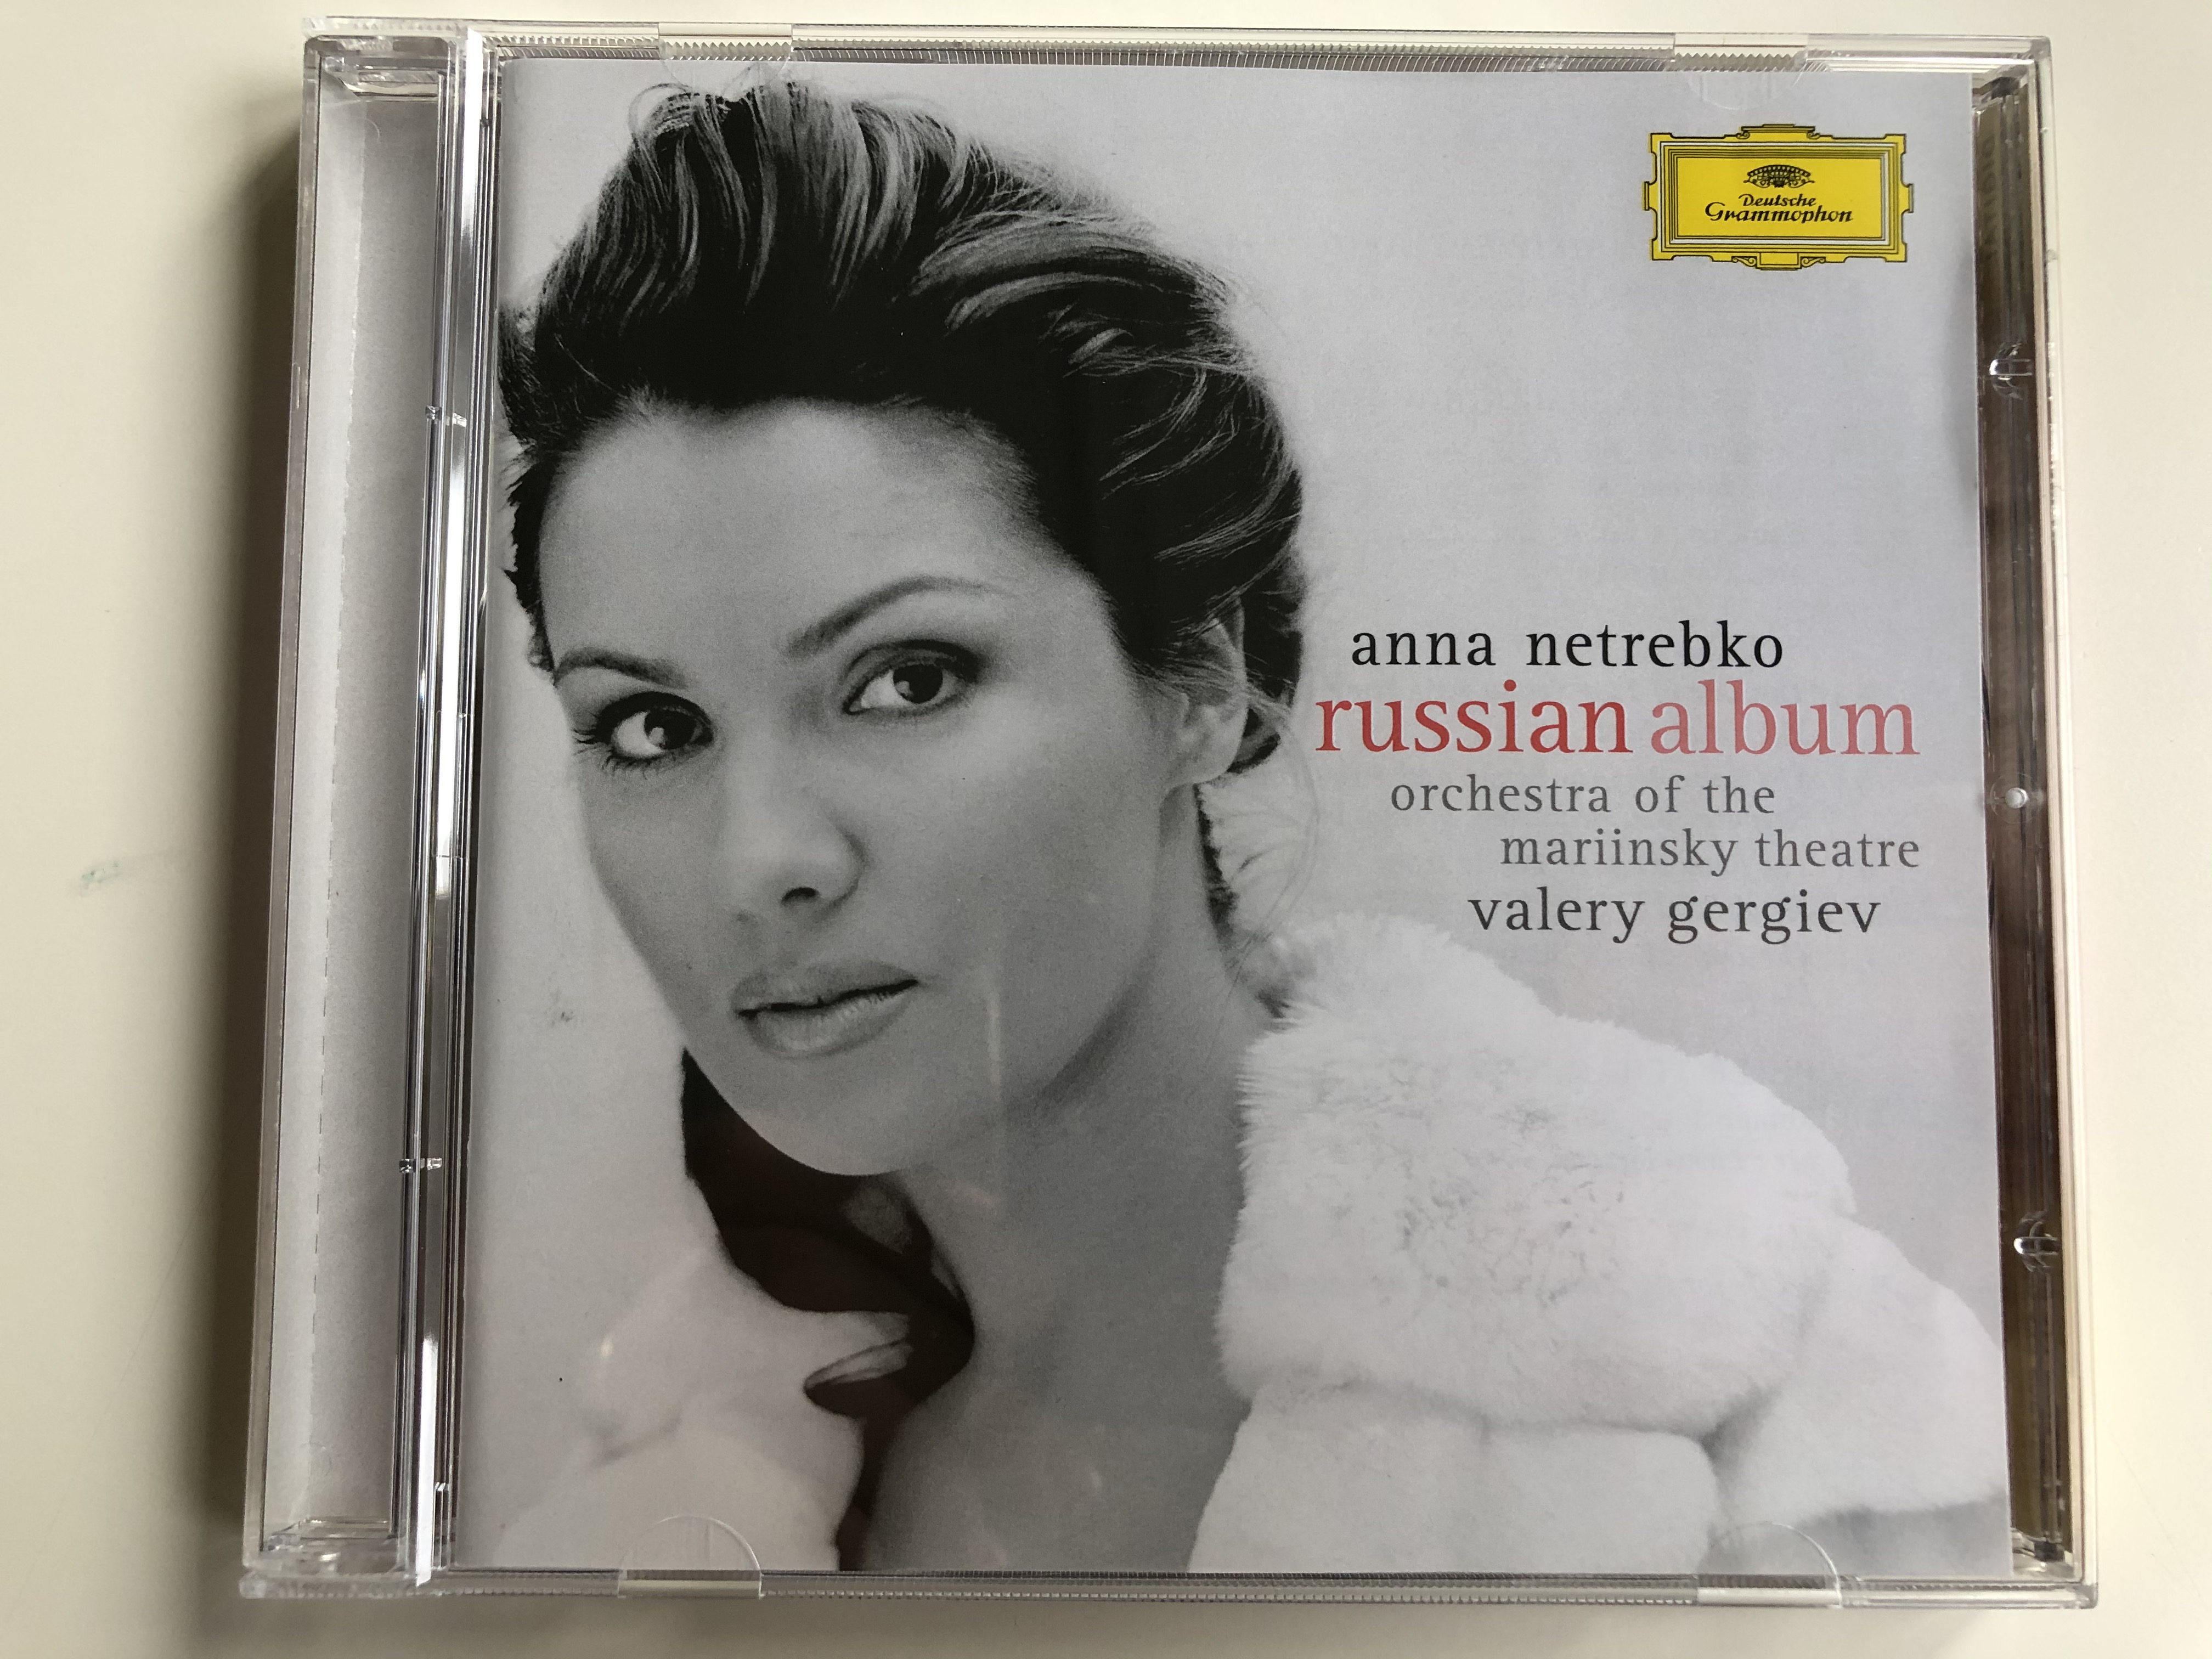 anna-netrebko-russian-album-orchestra-of-the-mariinsky-theatre-valery-gergiev-deutsche-grammophon-audio-cd-2006-00289-477-6384-1-.jpg